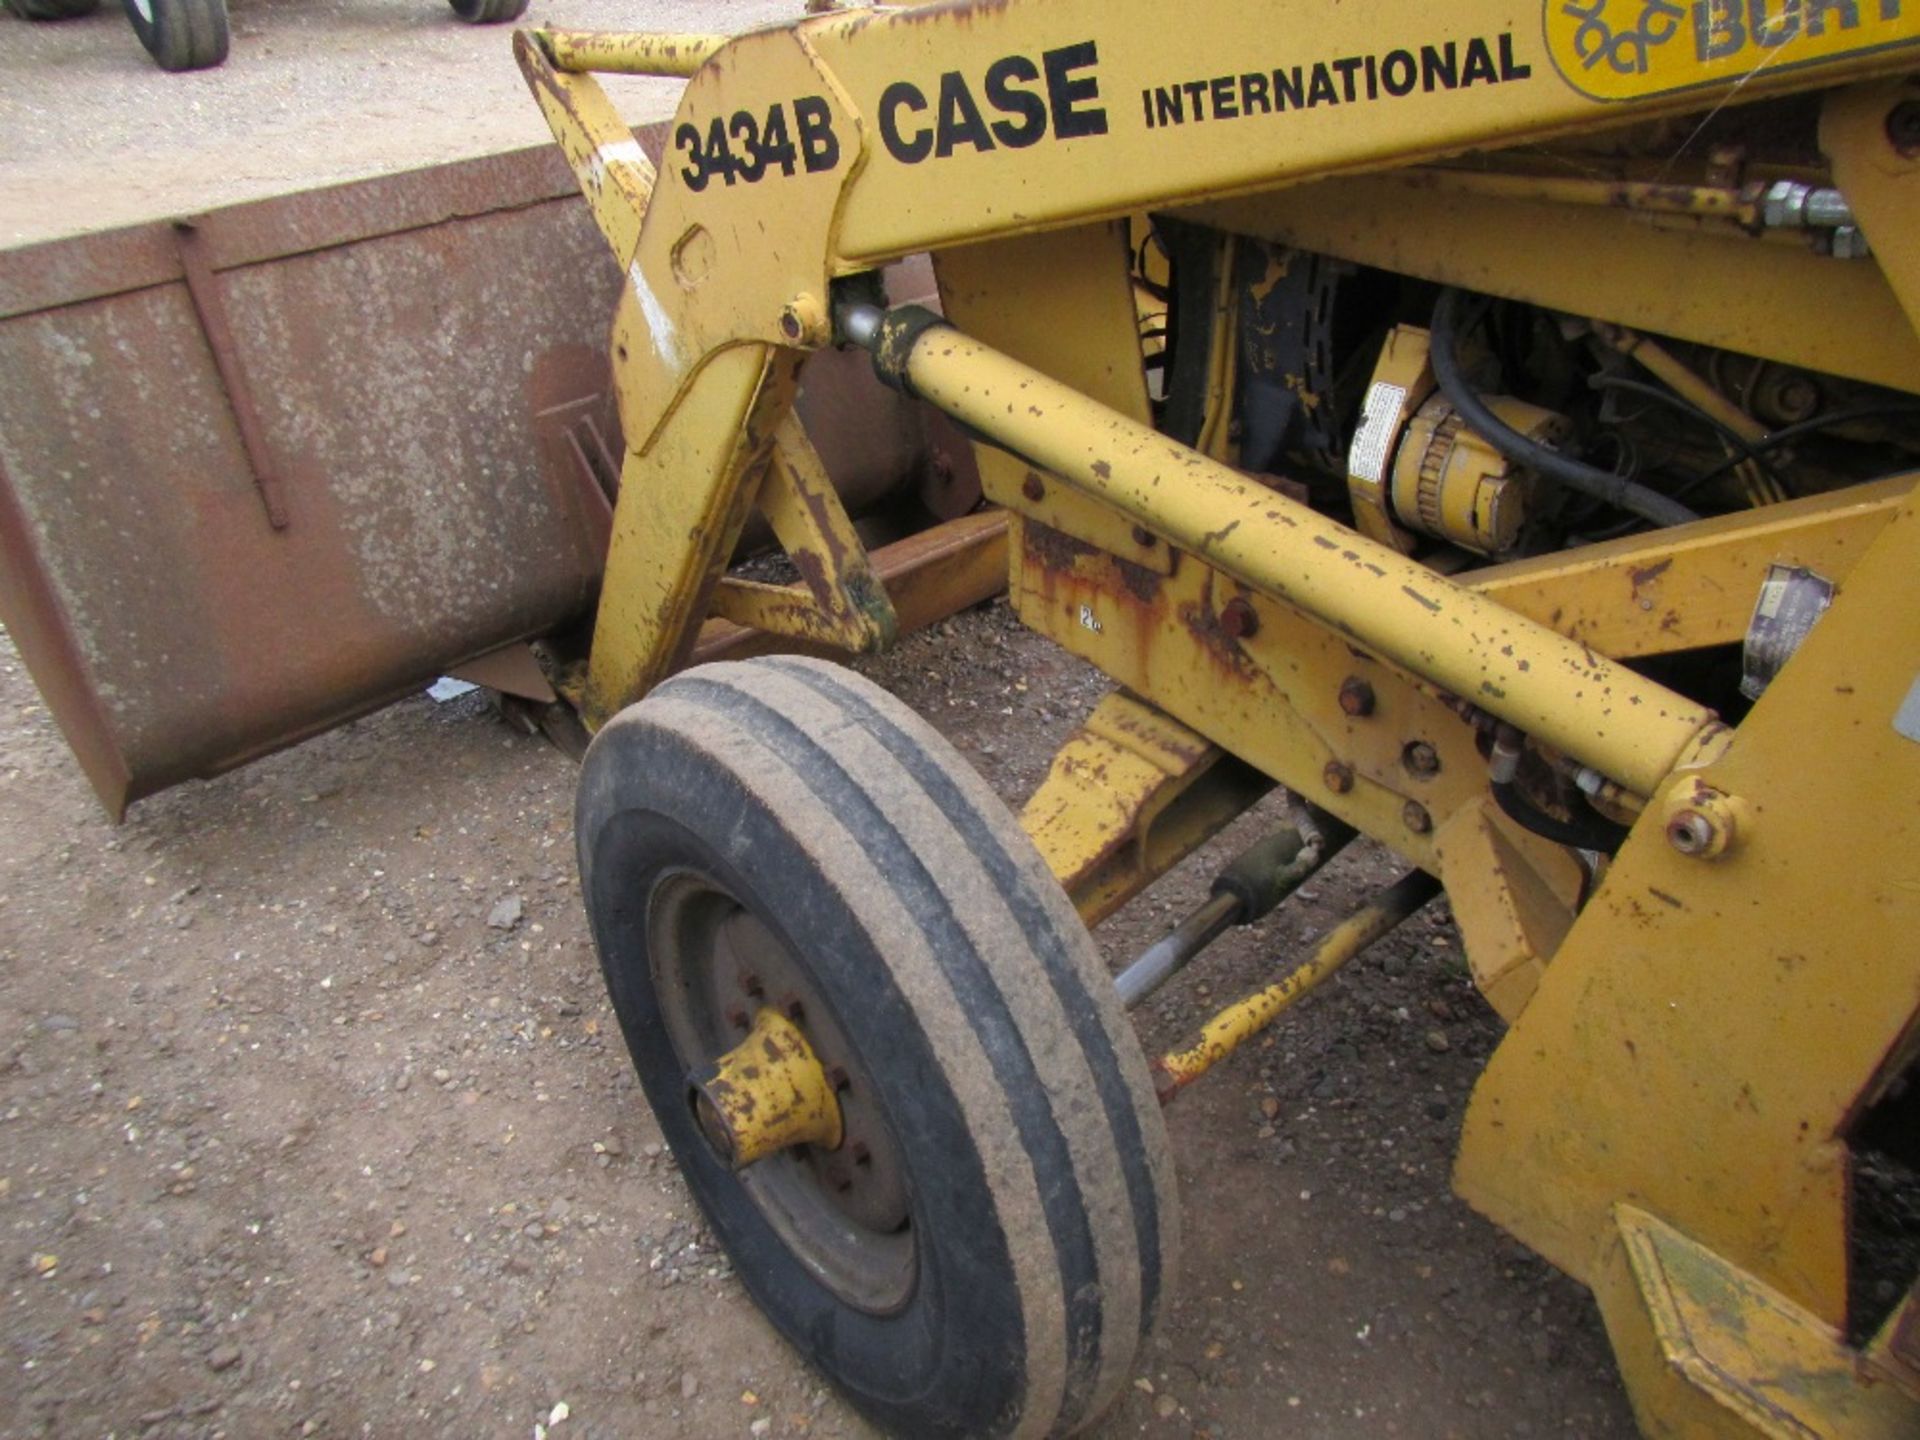 Case 3434B Tractor with Loader Reg. No. G813 VNF - Image 9 of 12